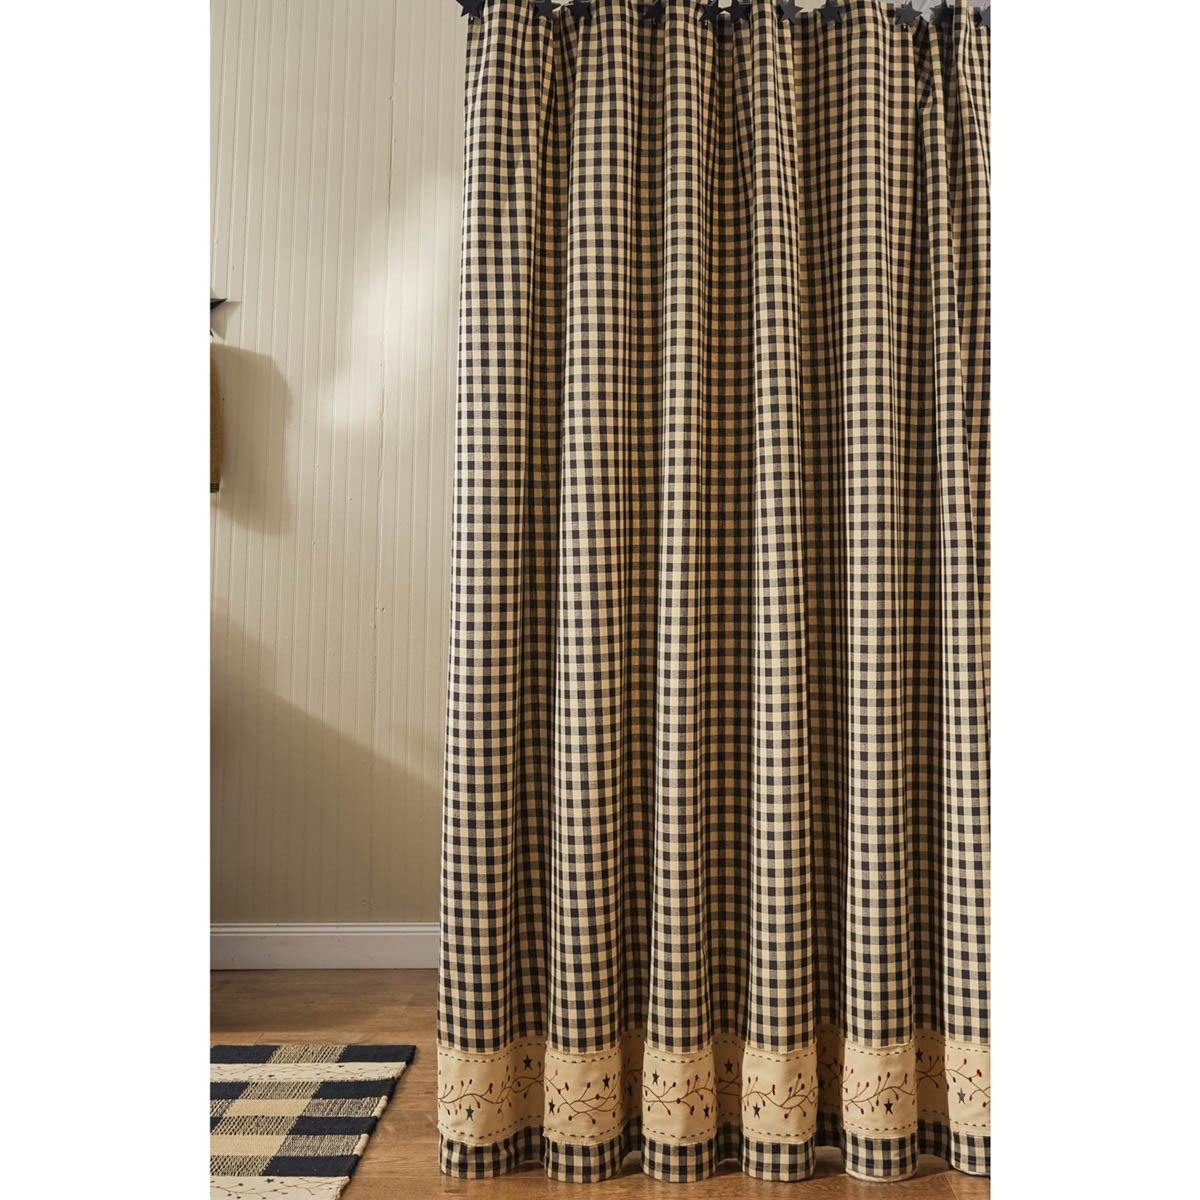 Berry Gingham Shower Curtain - 72" x 72" Park Designs - The Fox Decor